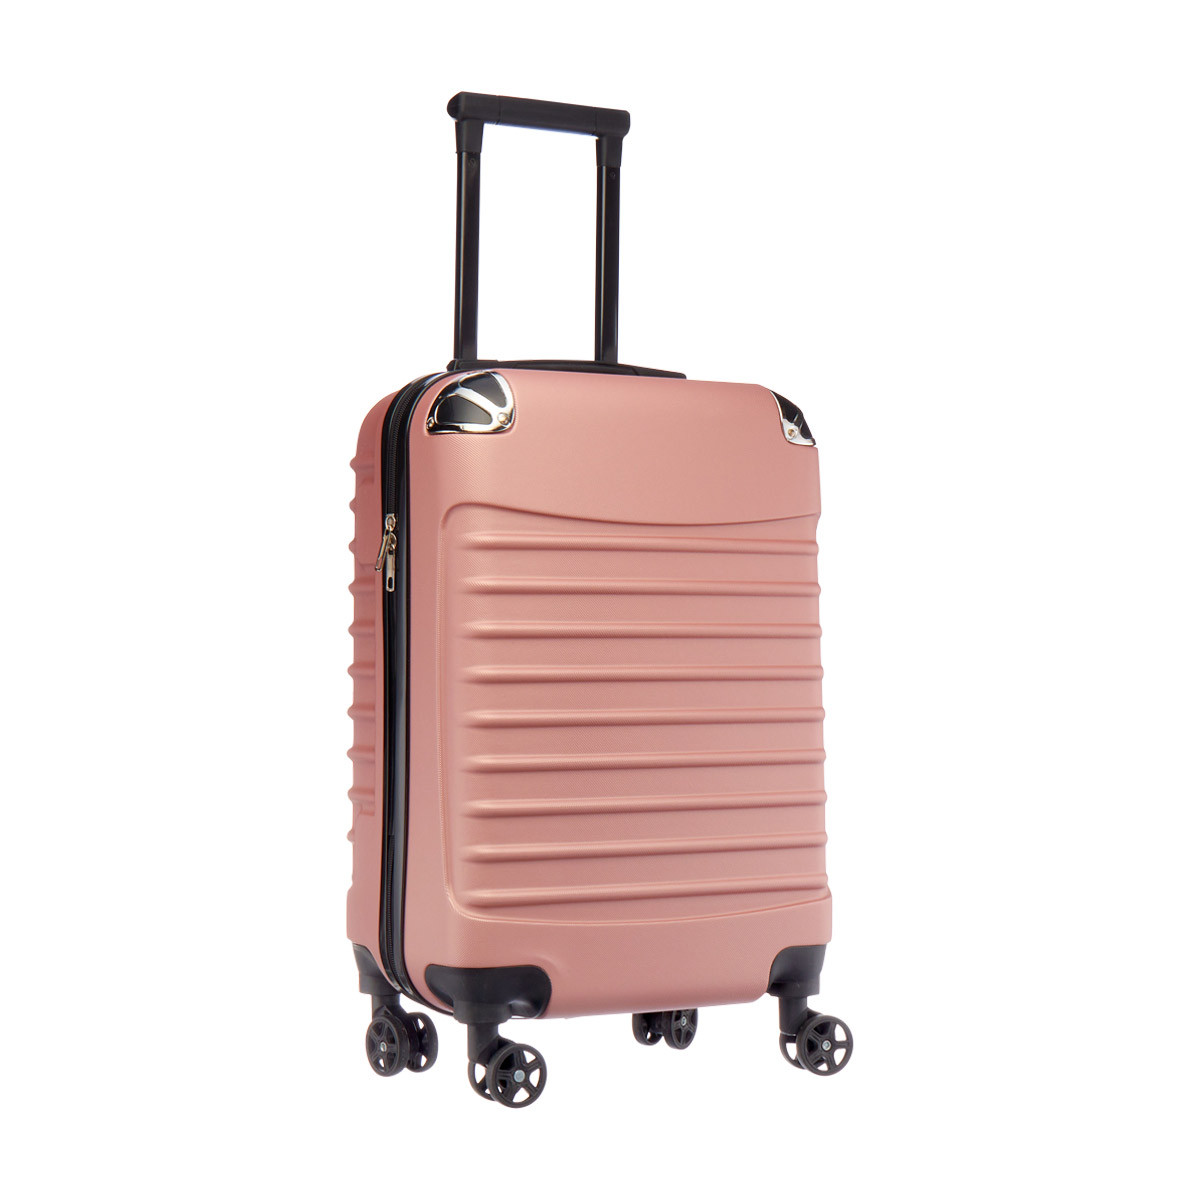 Luggage Trolley Bag, Rose Gold